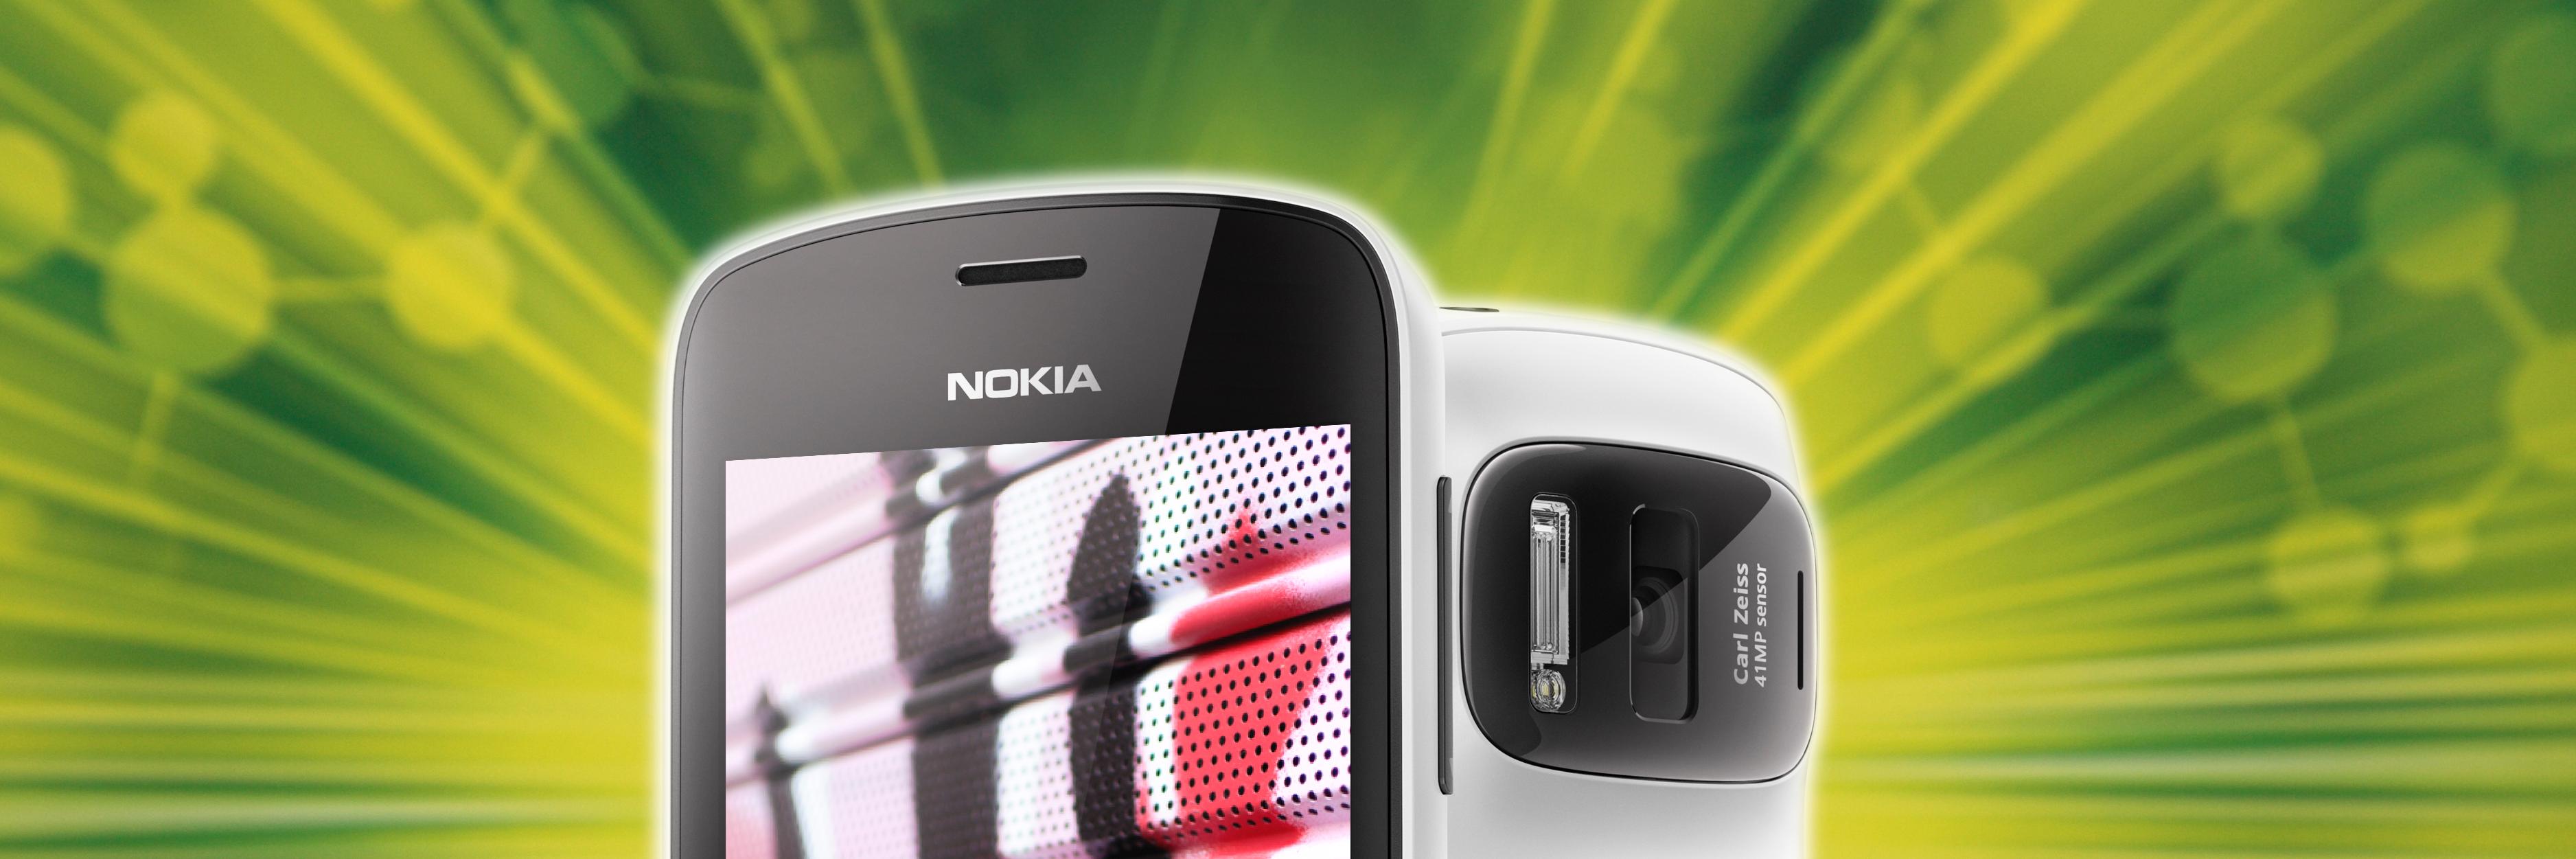 Vant du Nokias kameraflaggskip?